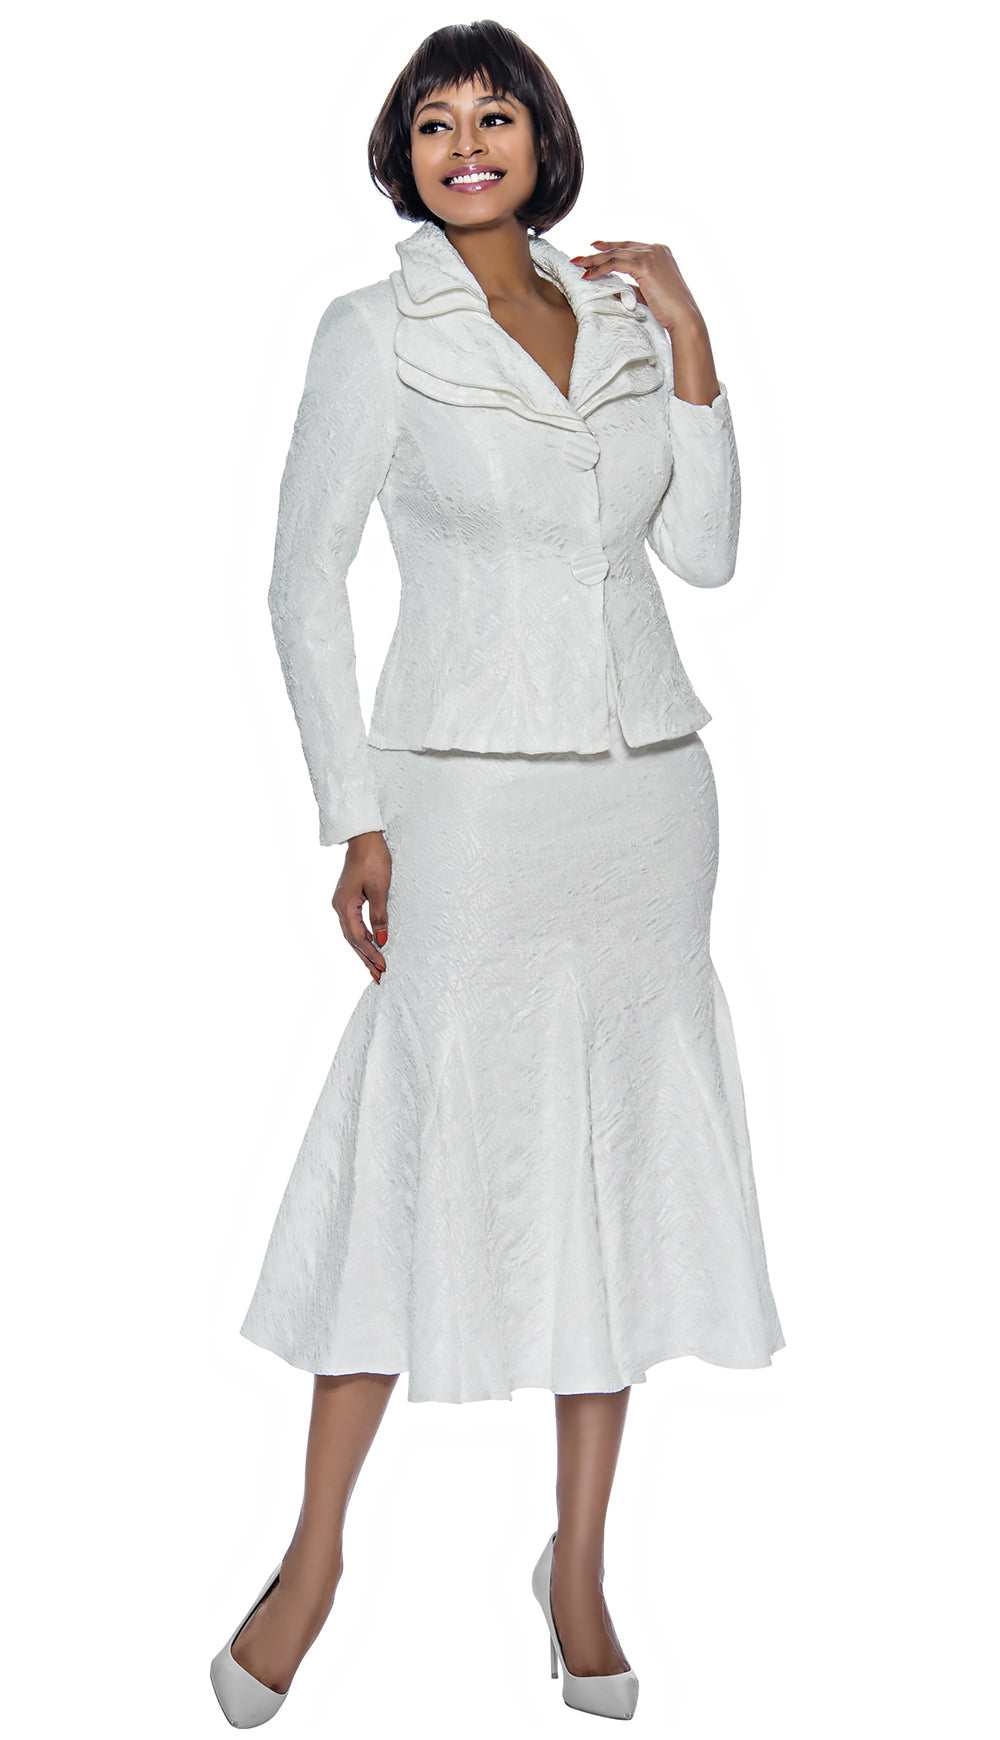 Terramina Church Suit 7988C-White - Church Suits For Less